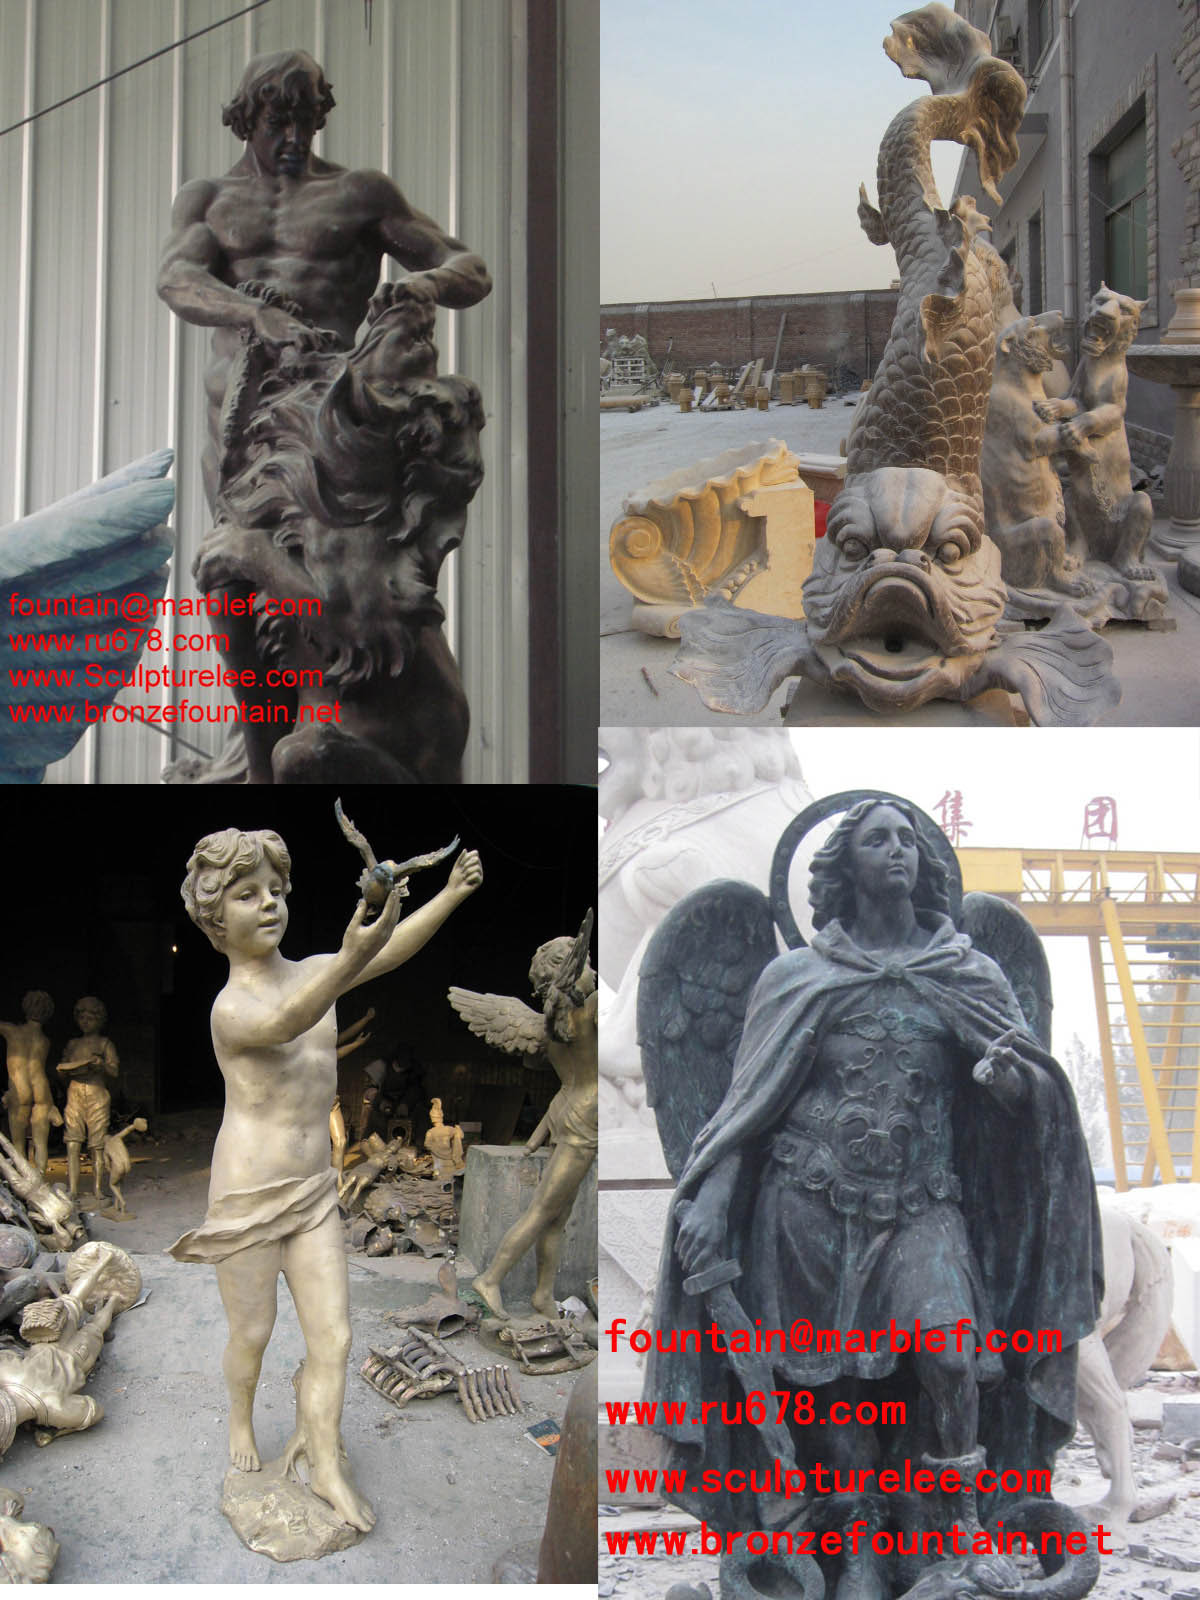 christian statue, monuments tombstones,religious figures